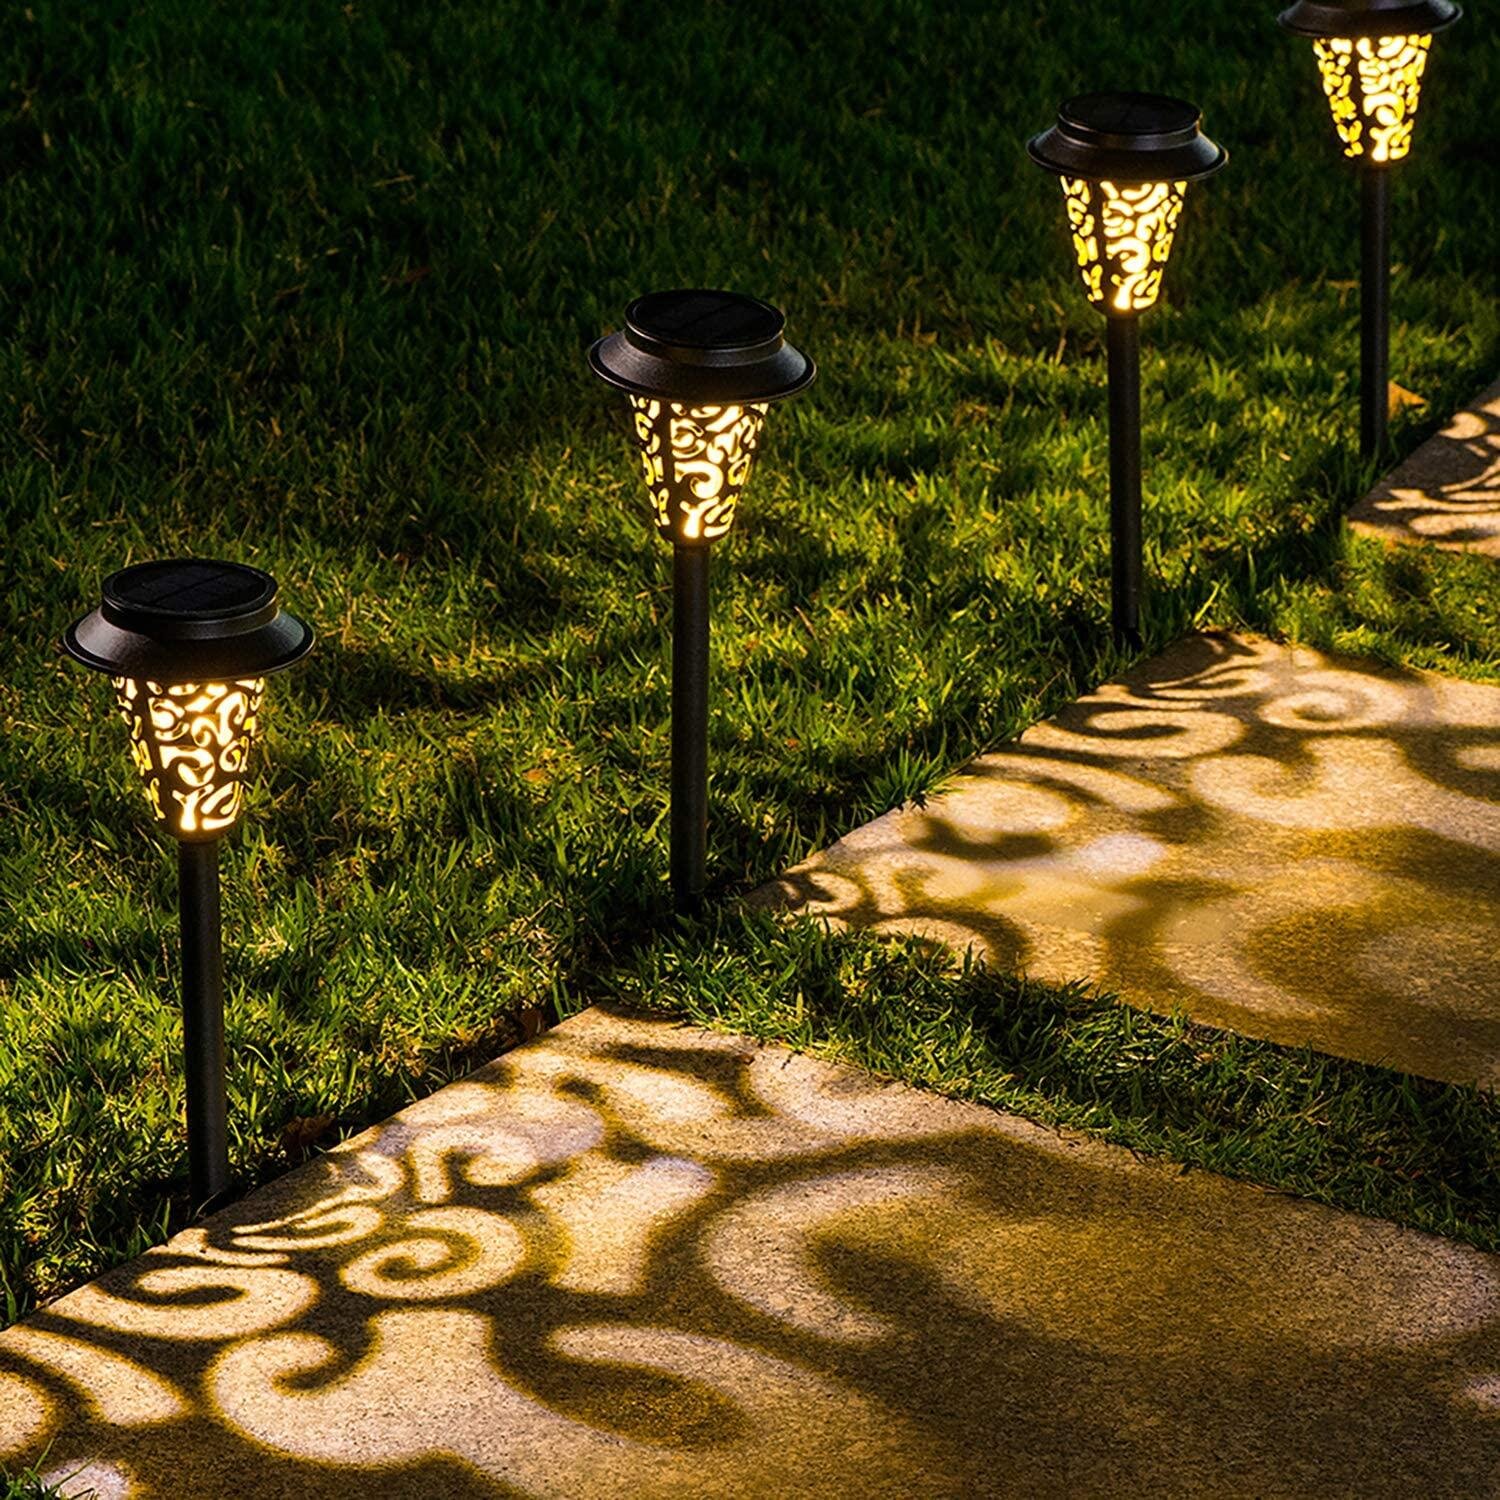 OUTDOOR SOLAR LED PATHWAY LIGHTS Walkway Garden Landscape Path Lighting 6-PACK 